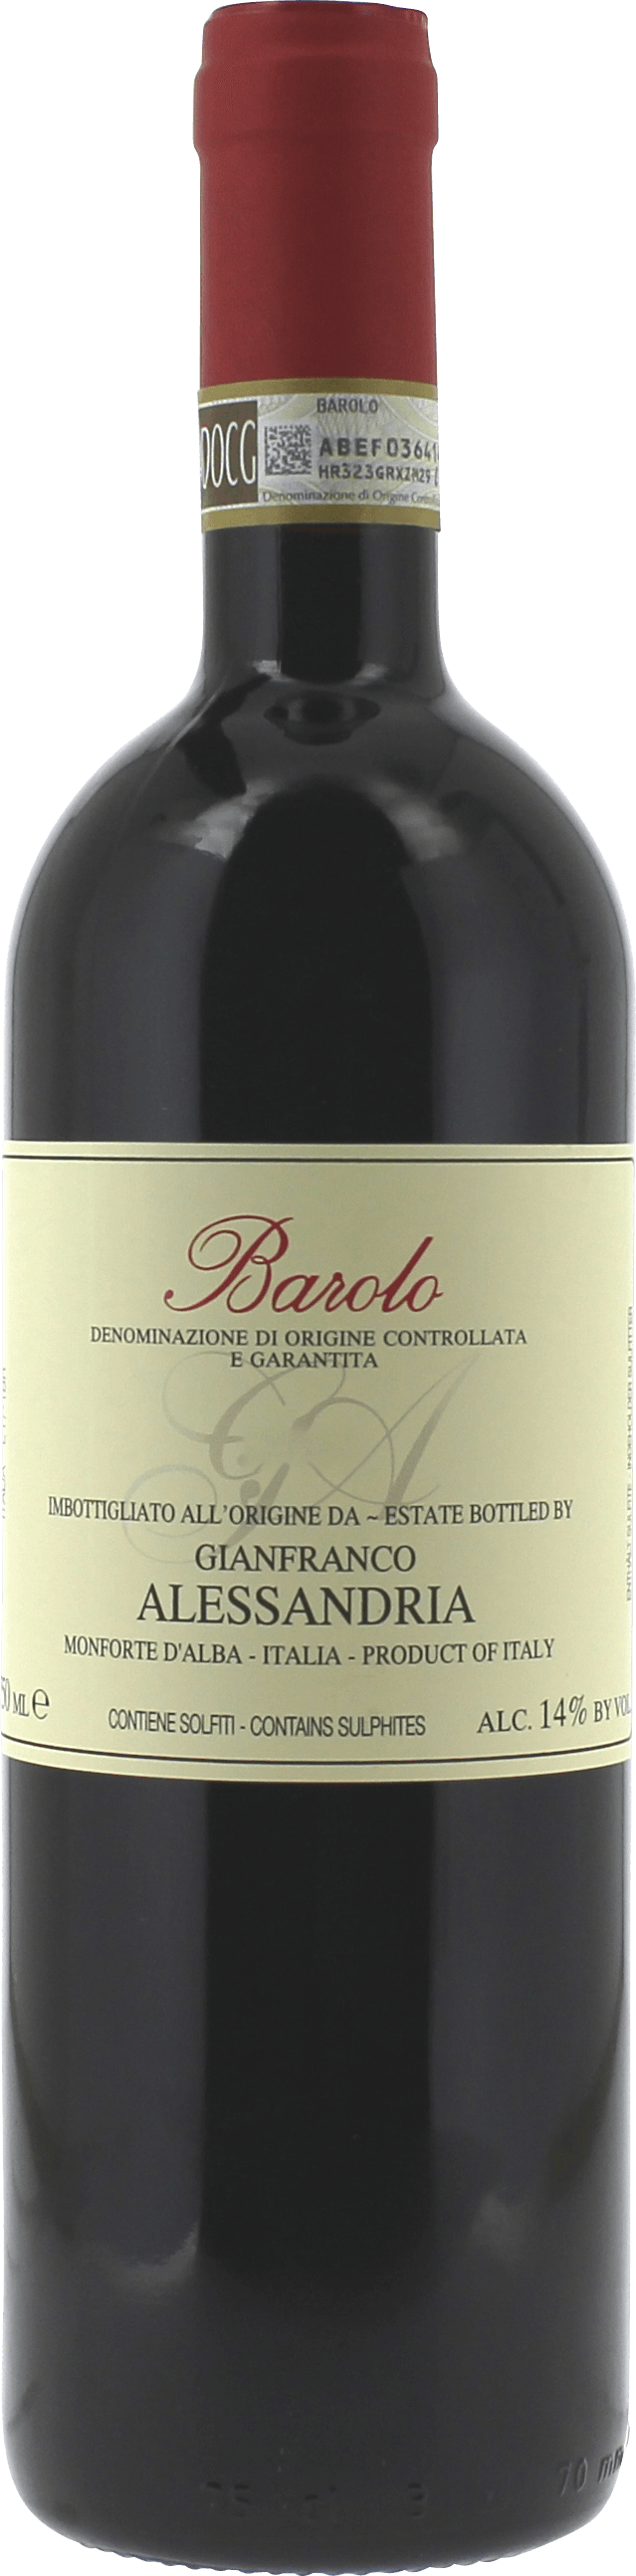 Alessandria - barolo nebbiolo 2014  , Vin italien